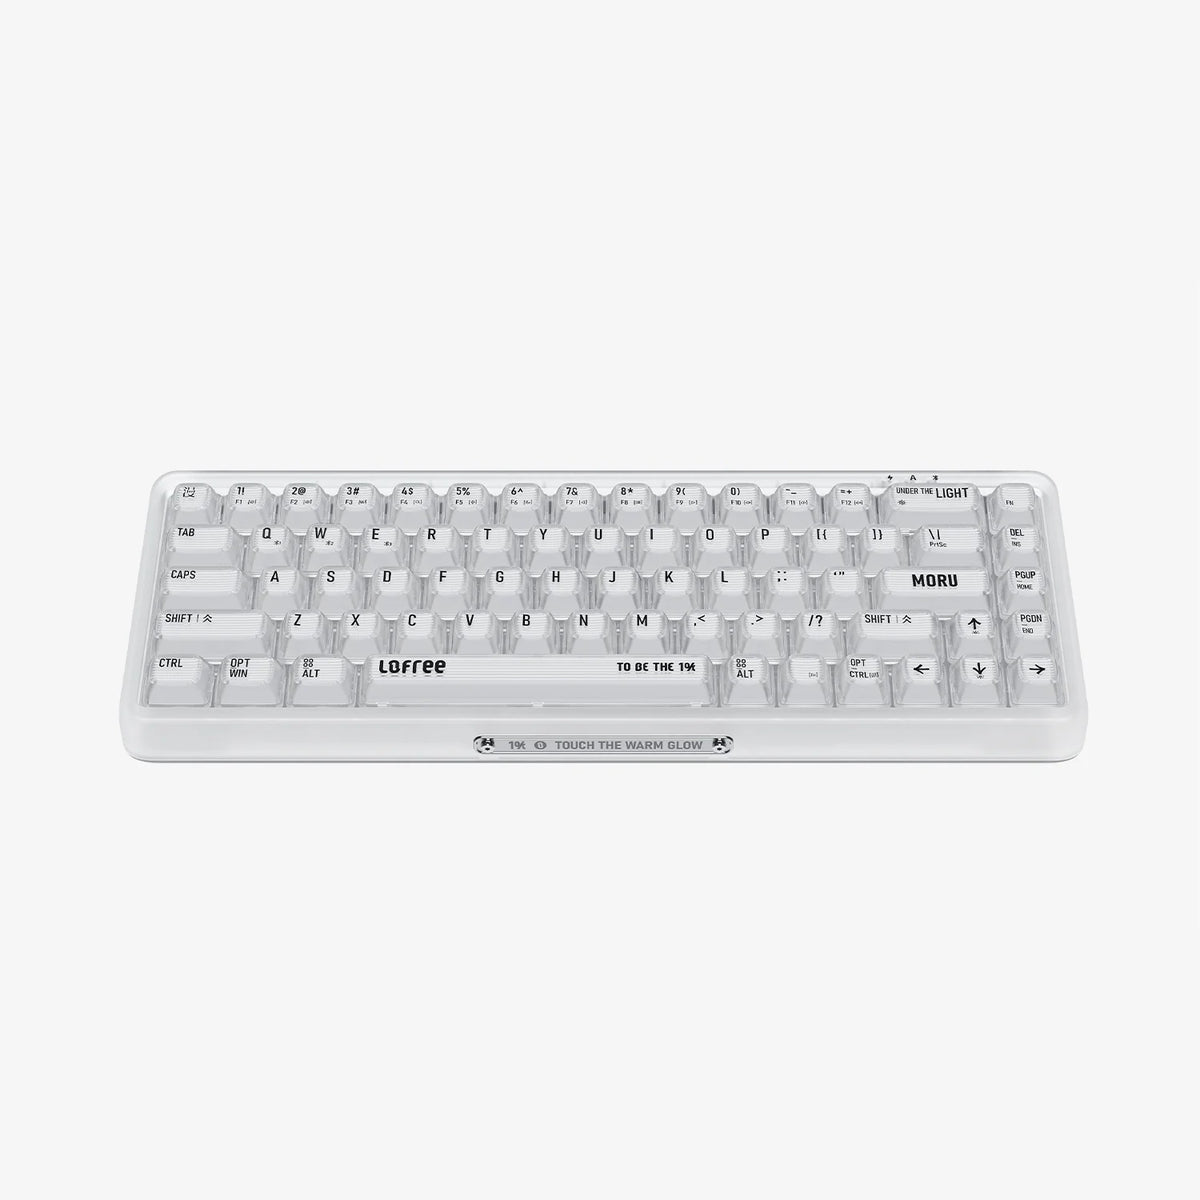 LOFREE 1% "Moru" Transparent Mechanical Keyboard